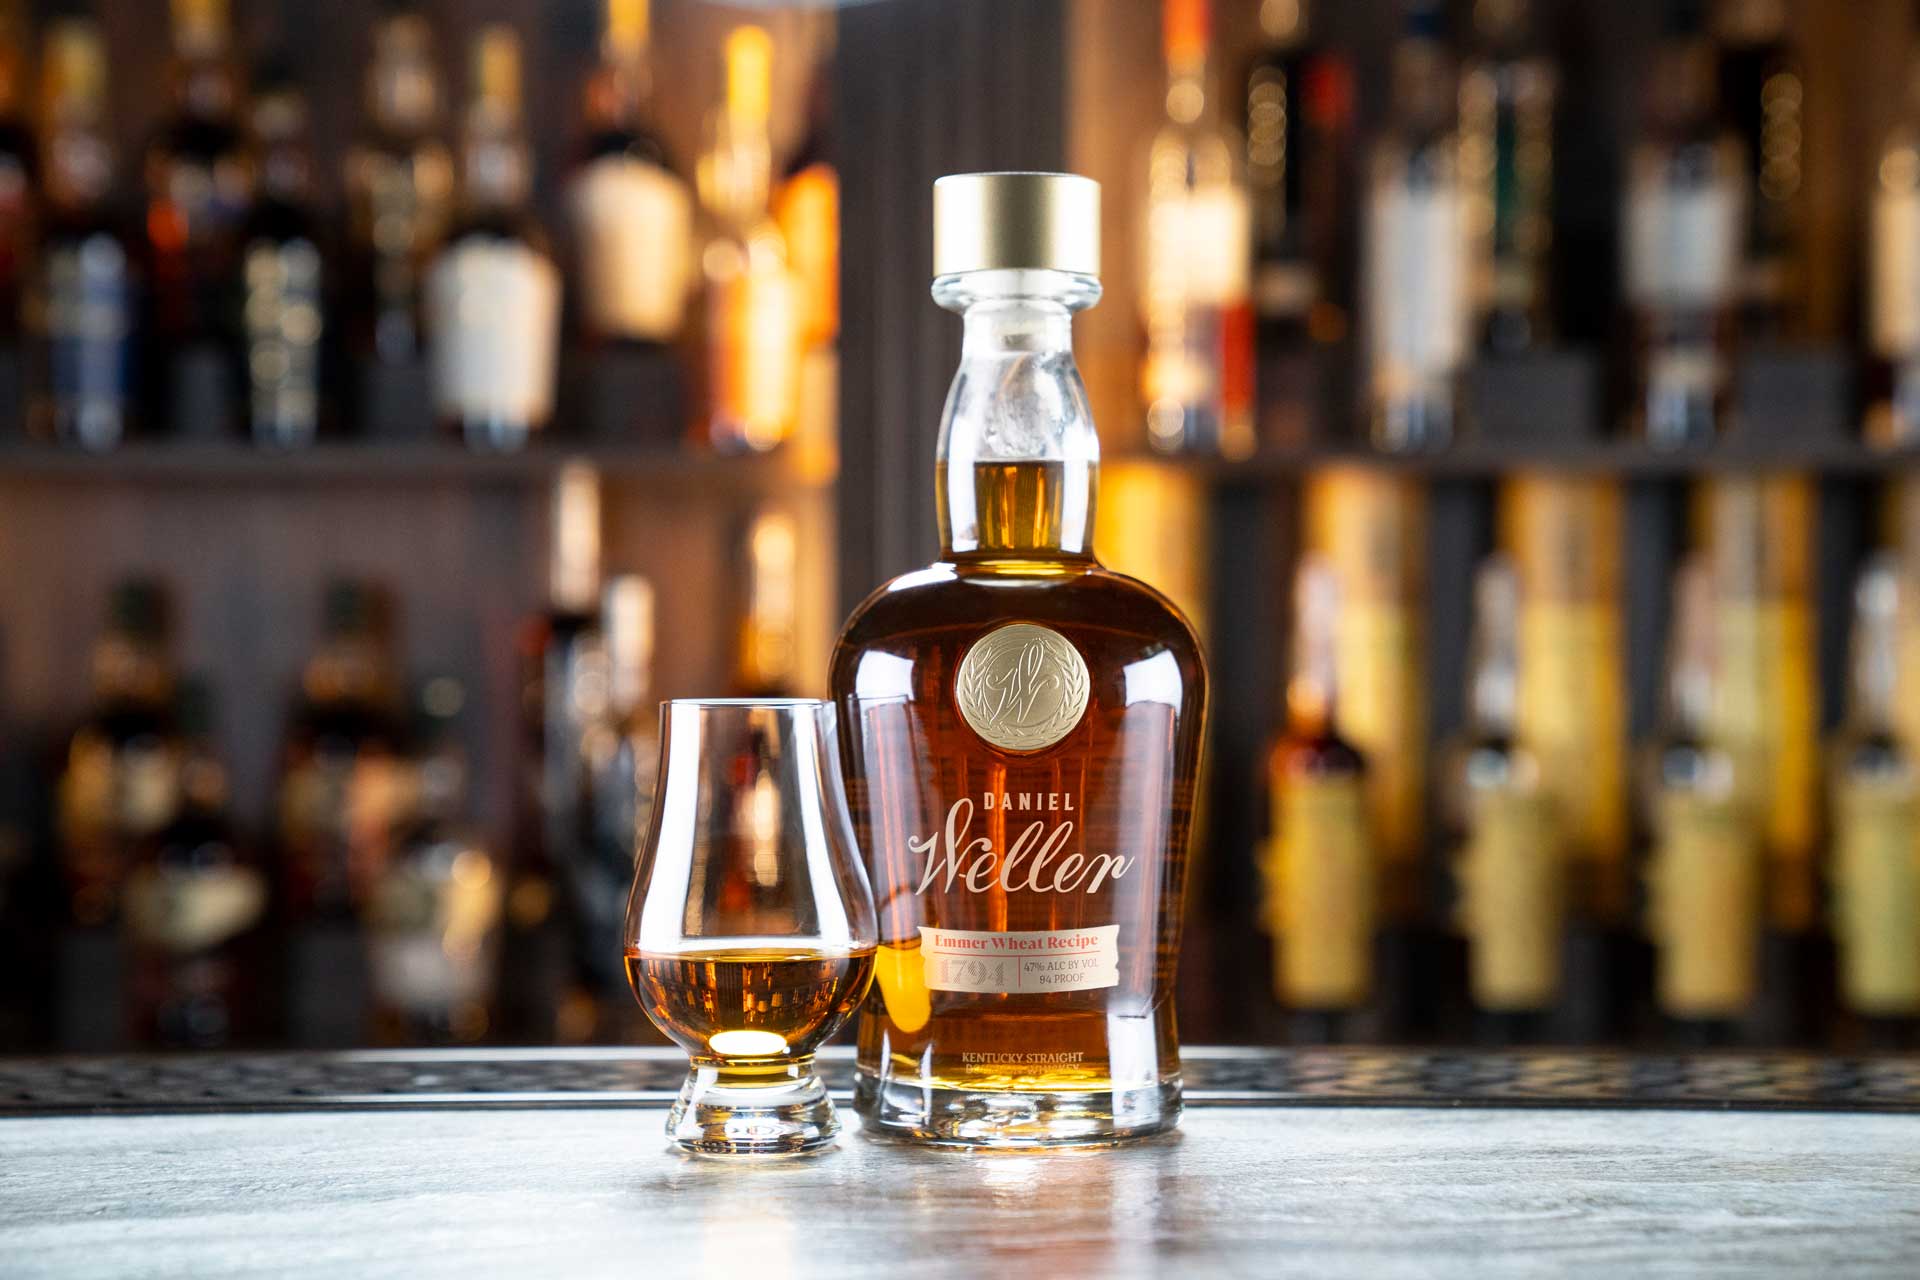 Daniel Weller Emmer Wheat recipe bourbon whiskey bottle beside a drinking glass.